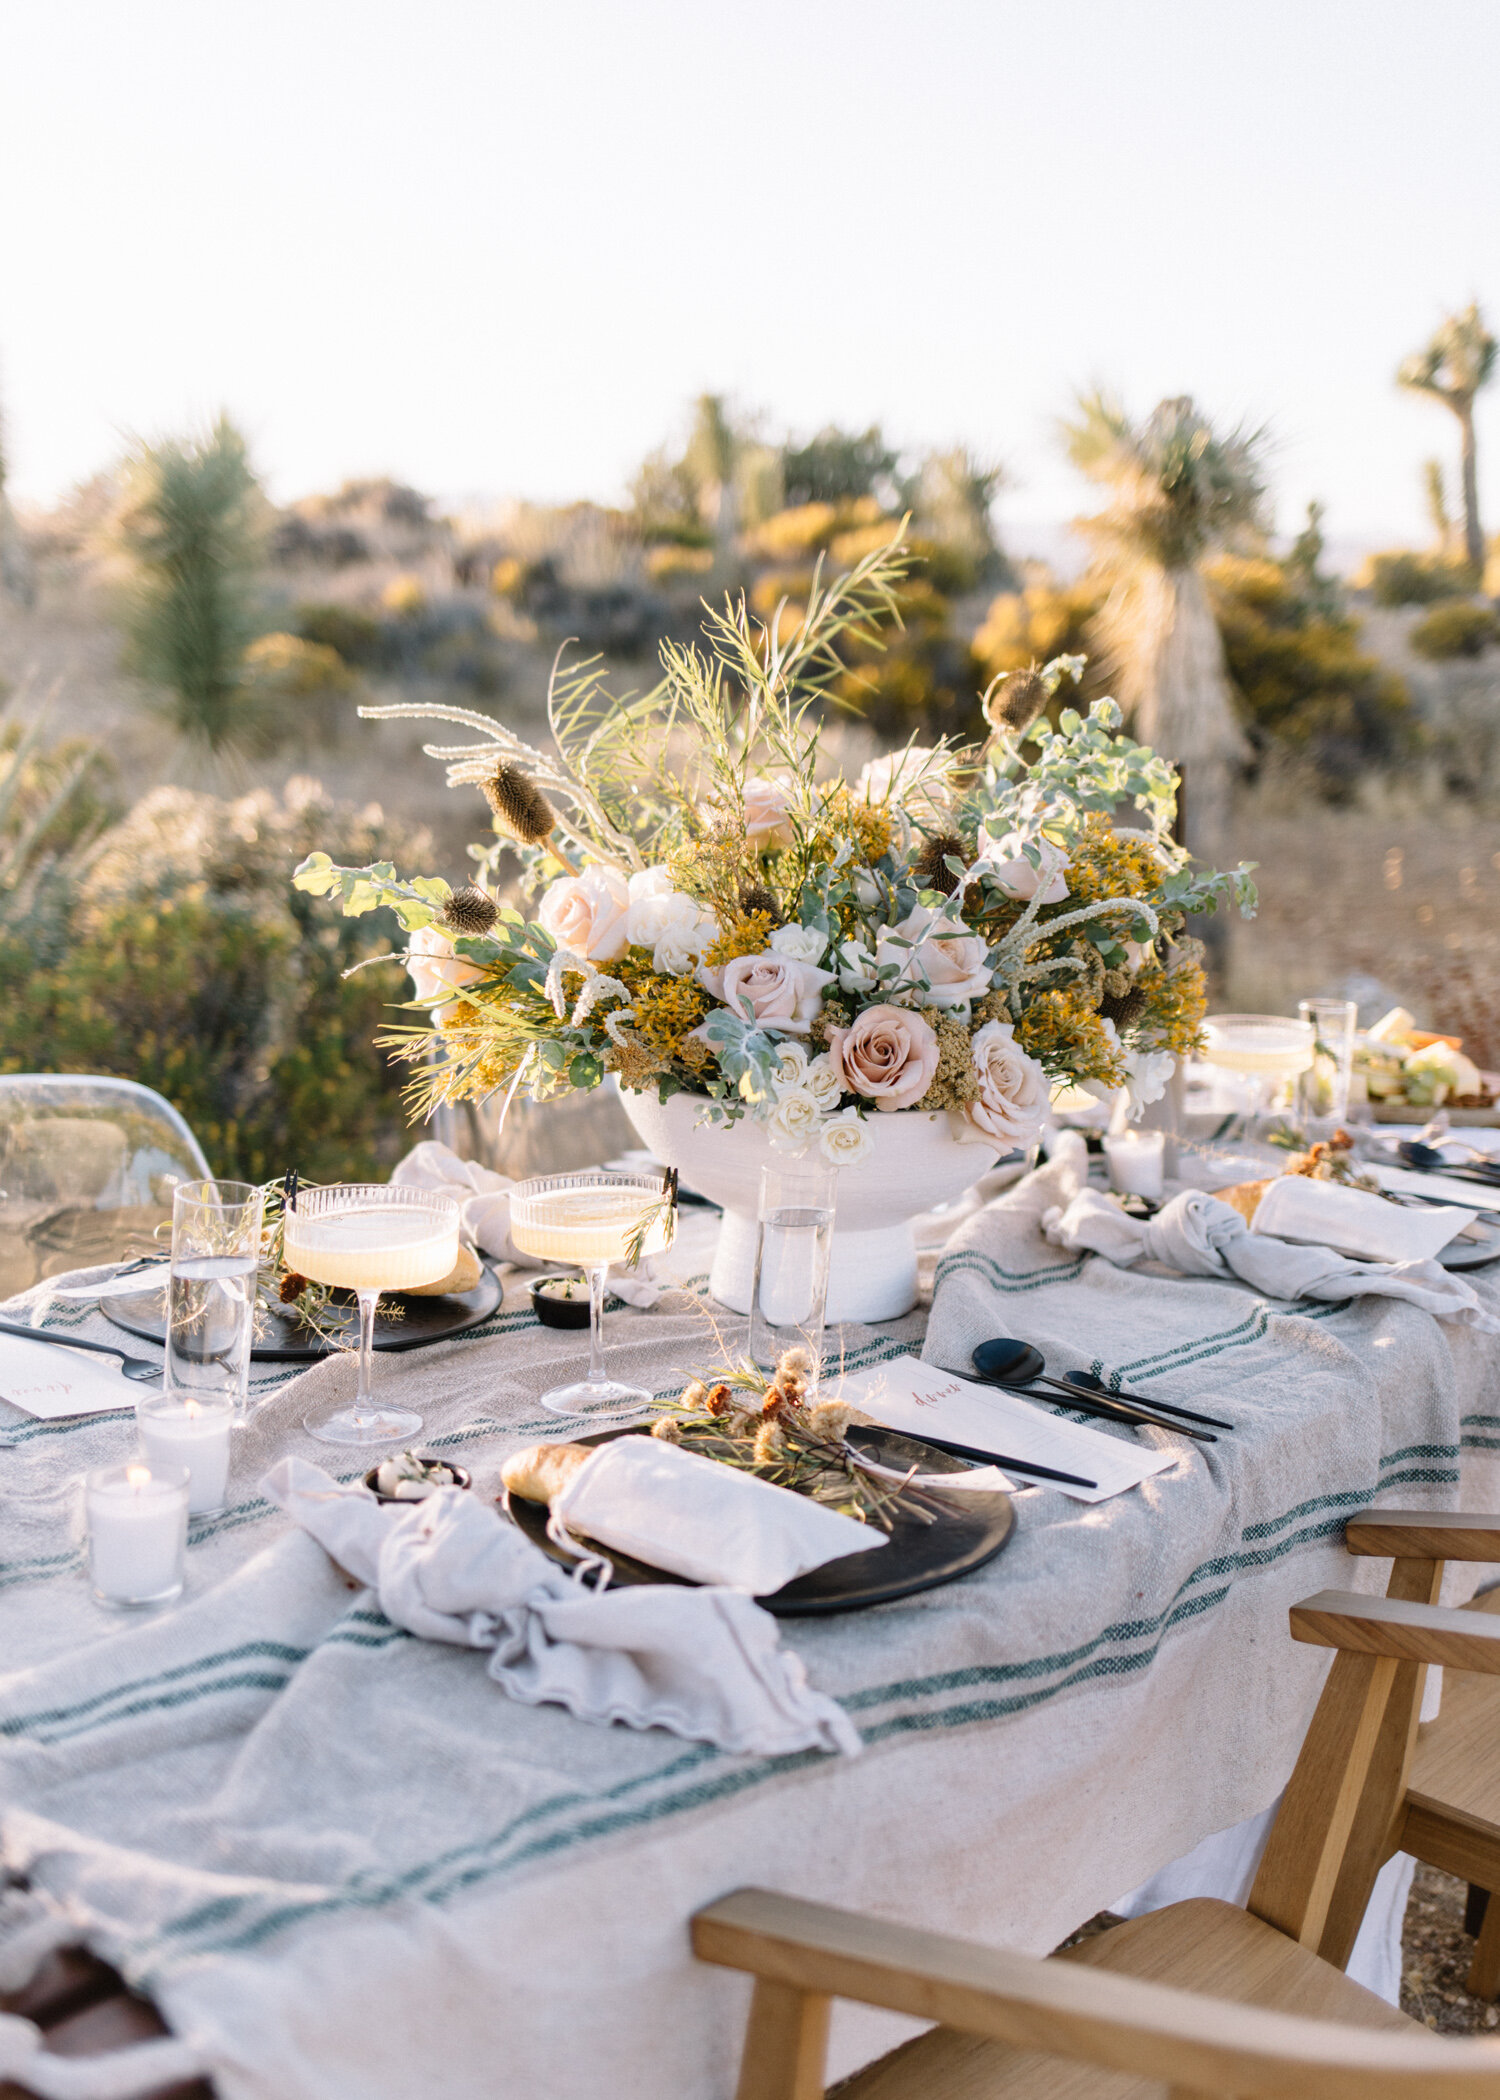 Fall Desert Dinner Party - A Fabulous Fete